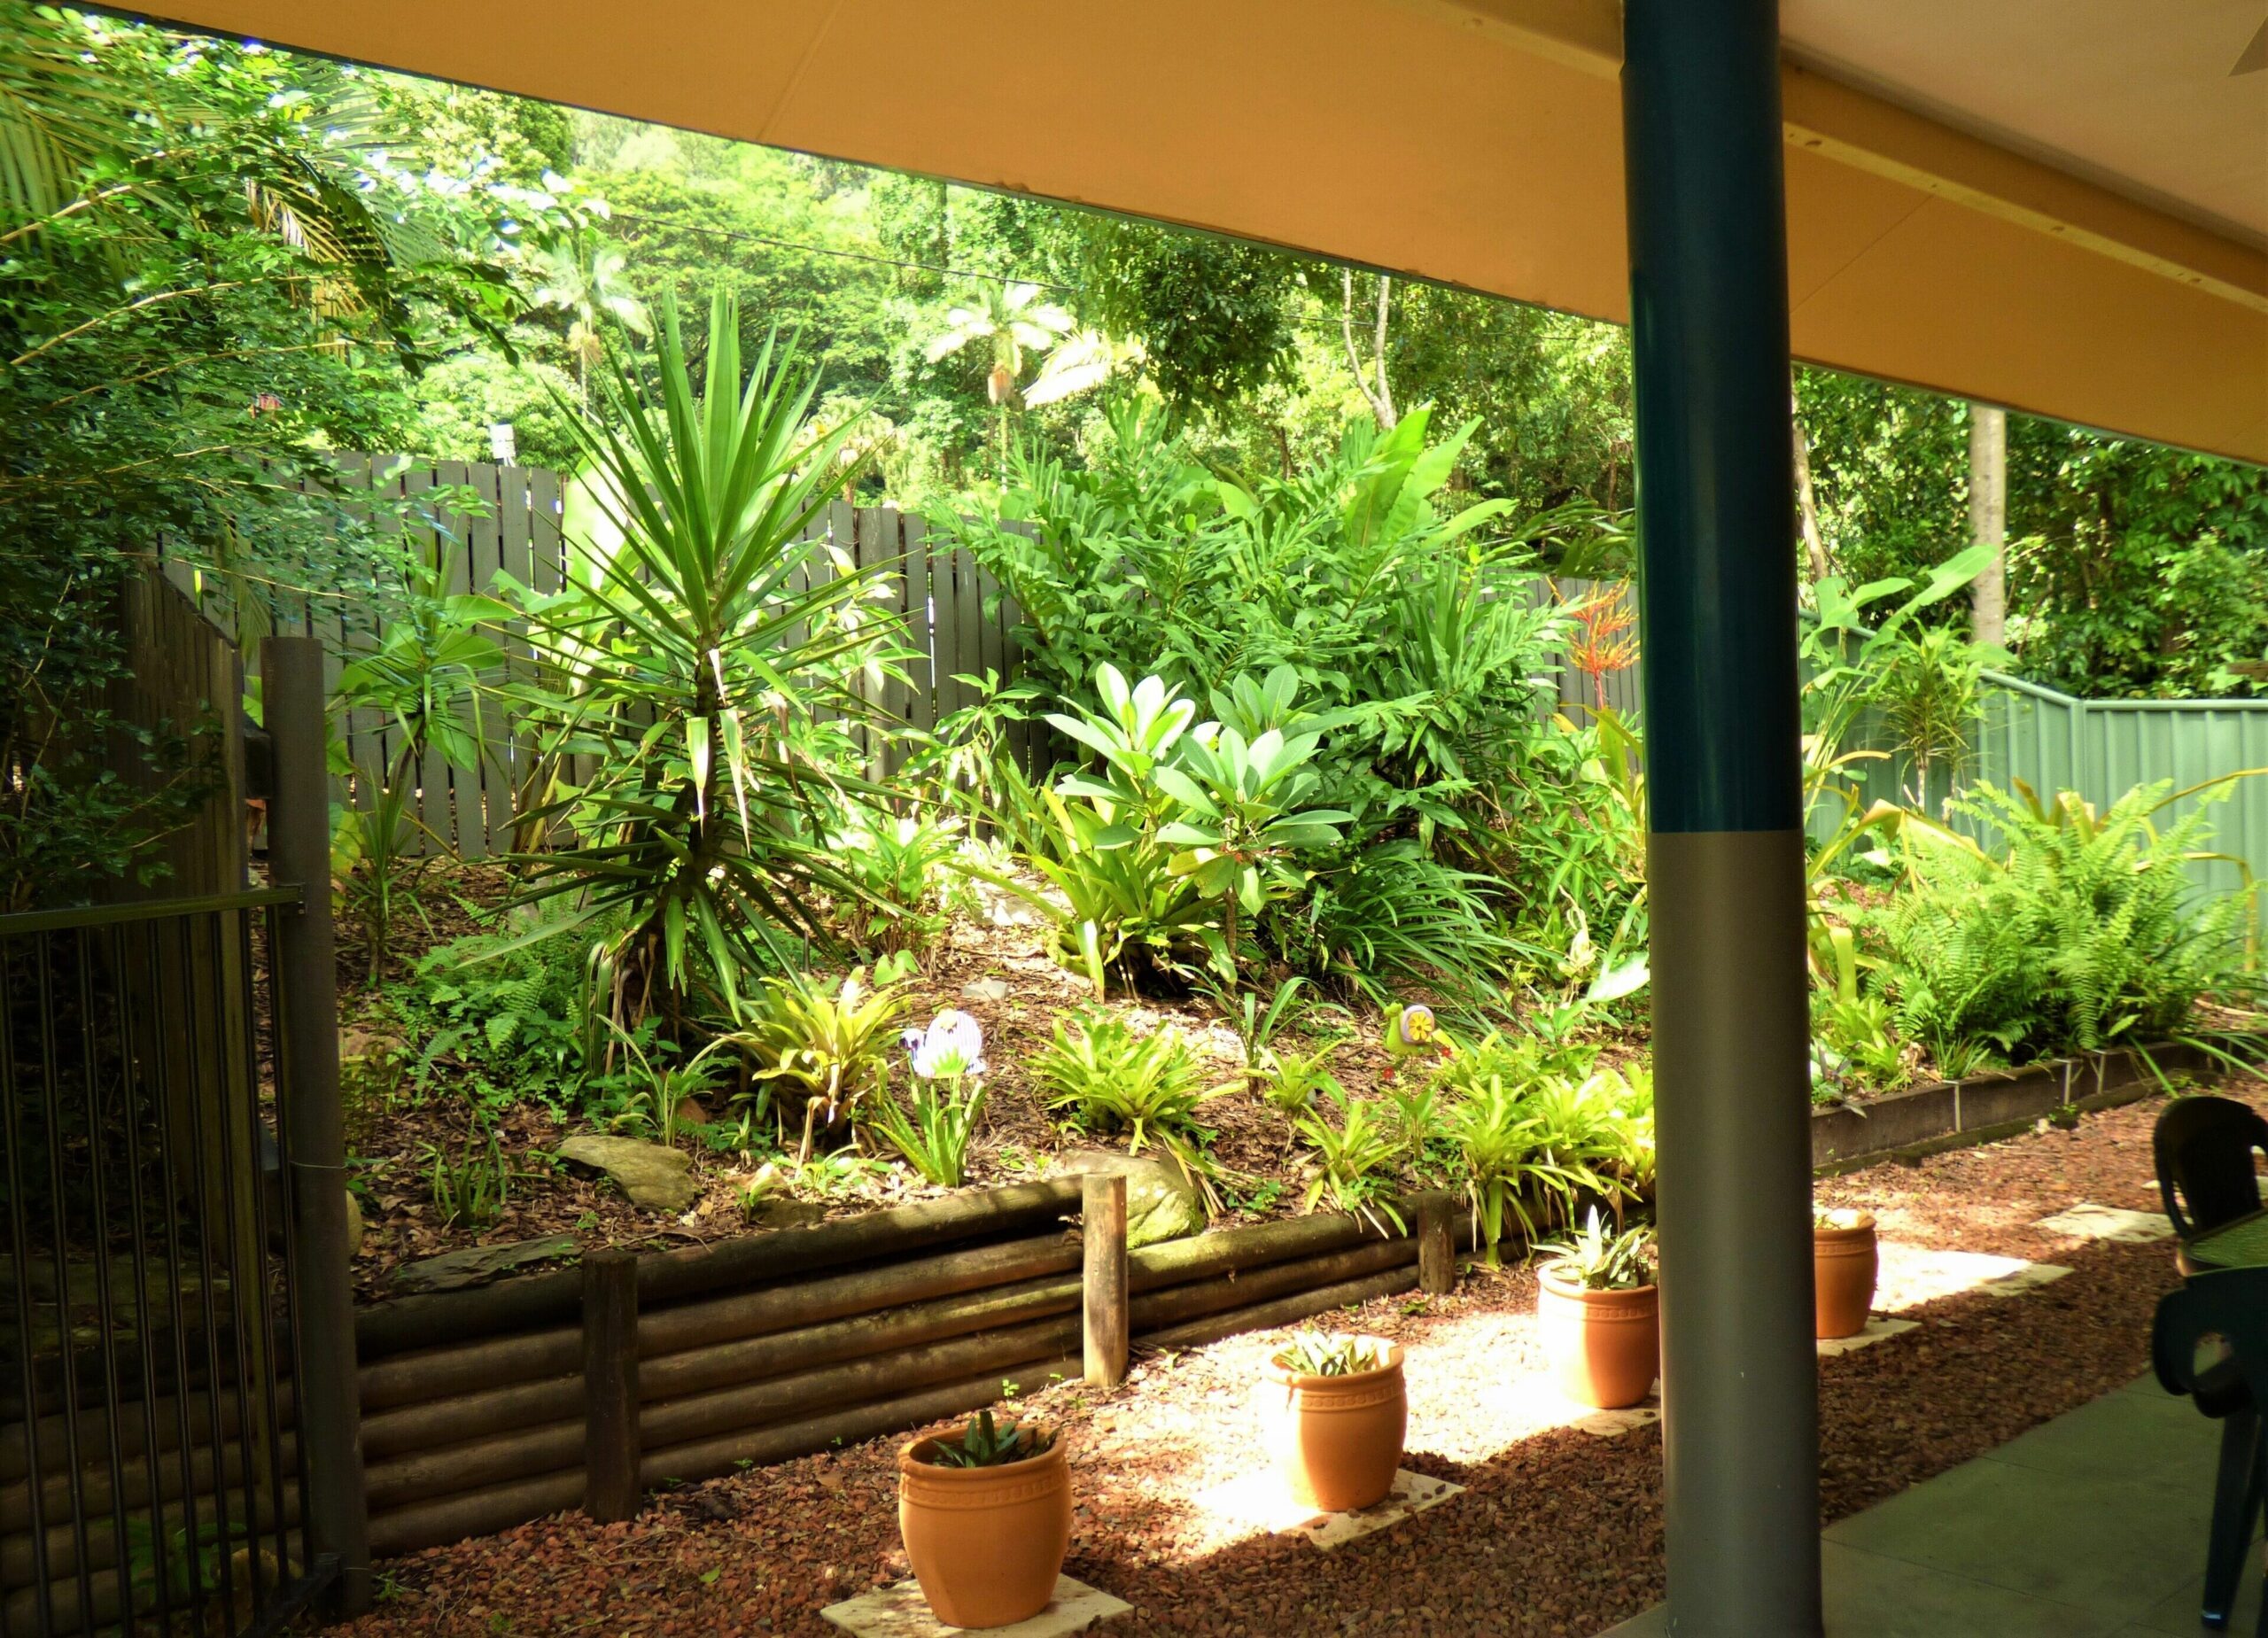 Cairns Rainforest Cottage Tropic Hideaway Pets OK 10mins to City, Free Wifi